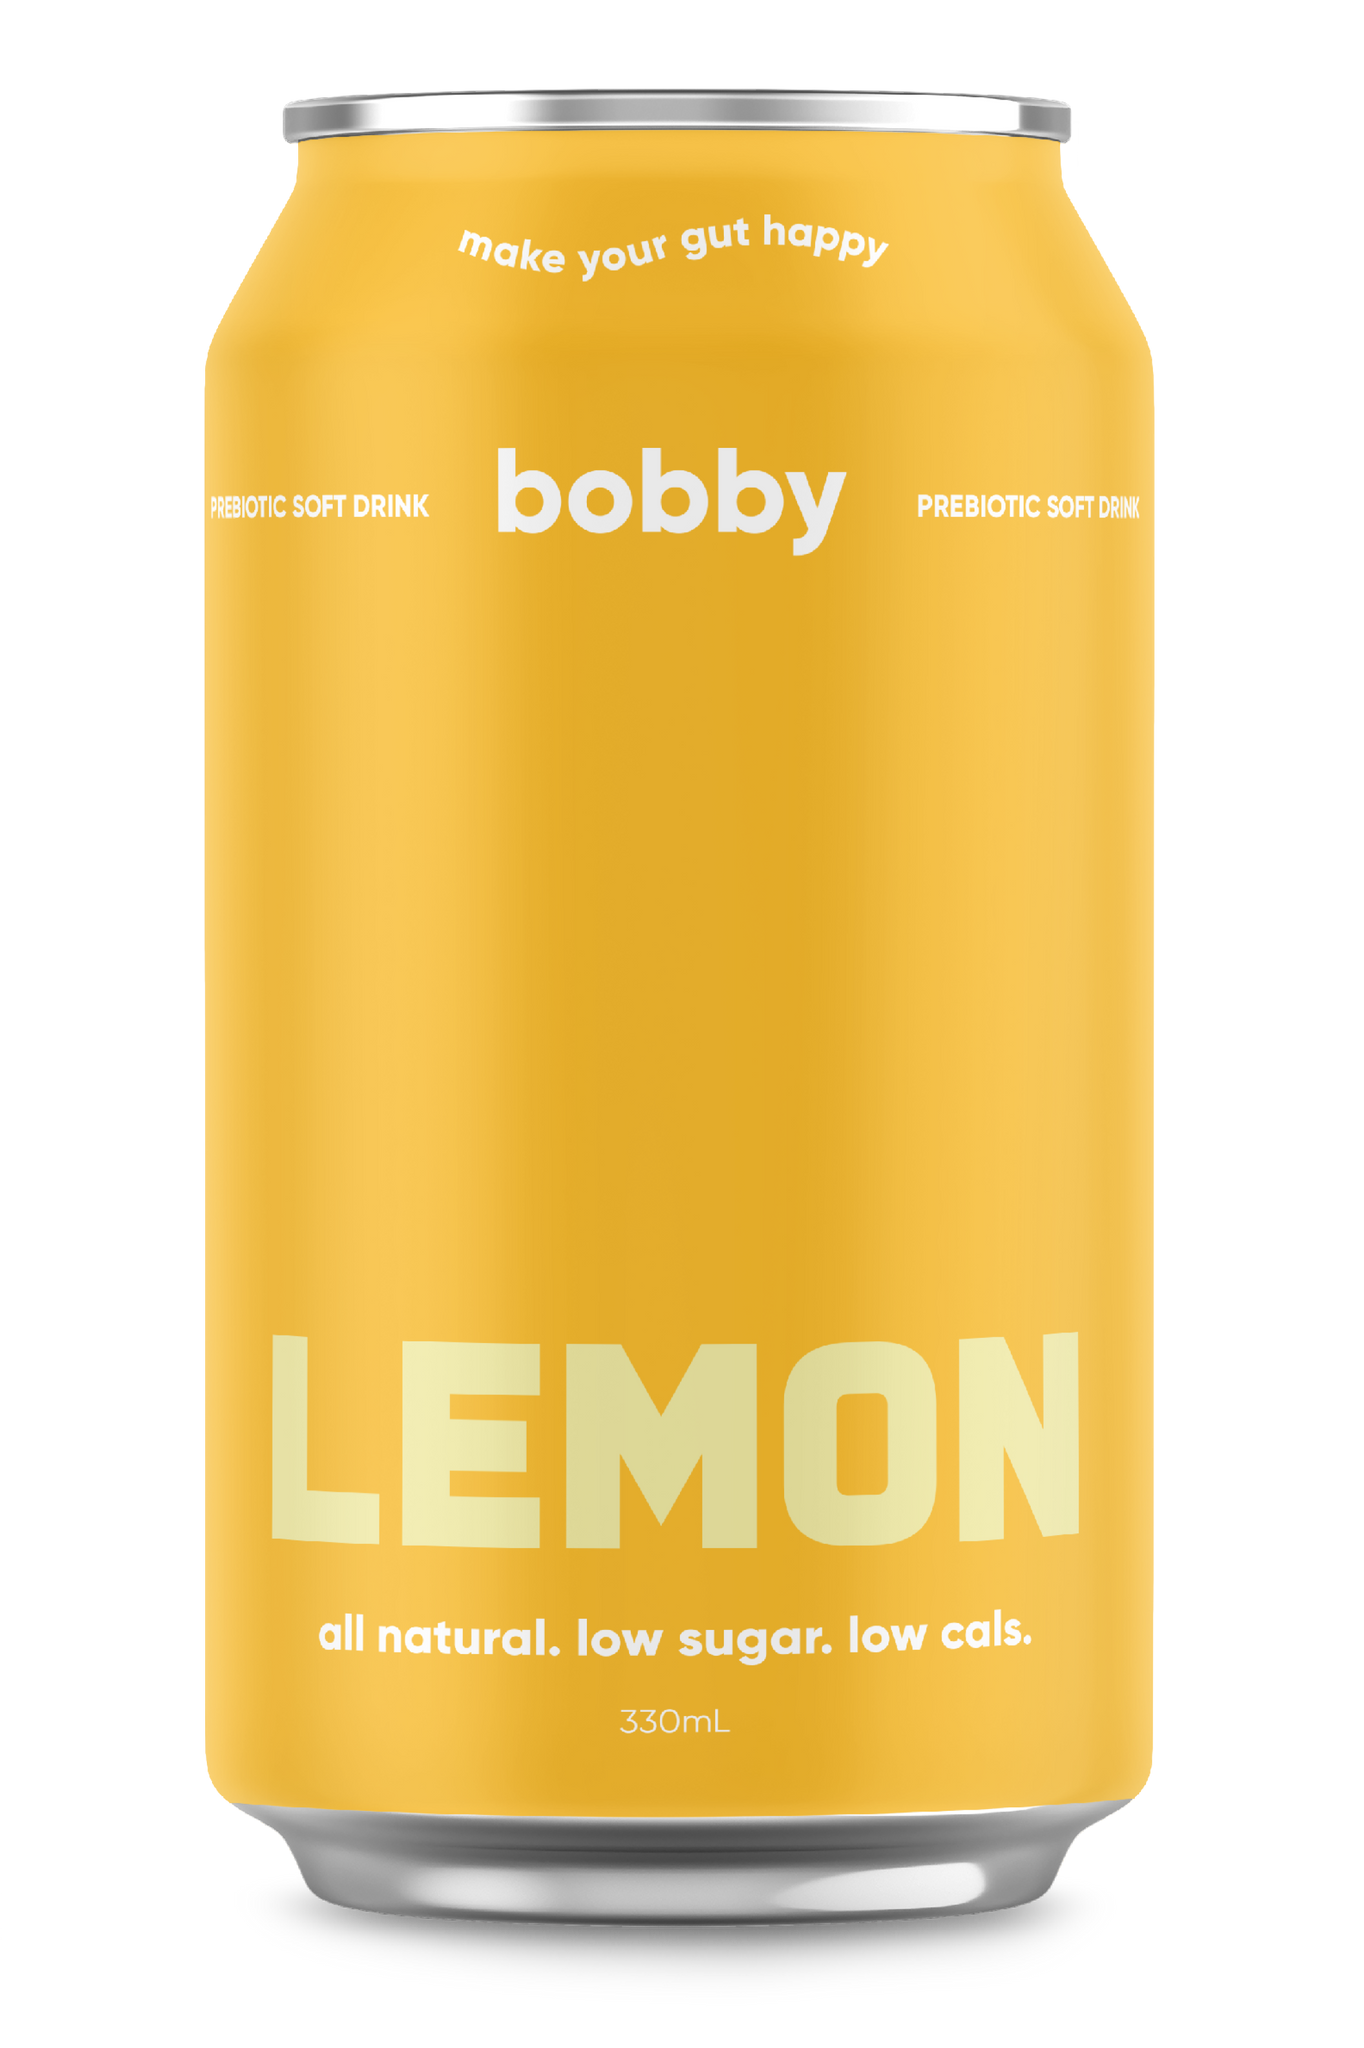 guilt free lemonade summer drink, all natural, low in sugar and low in calories